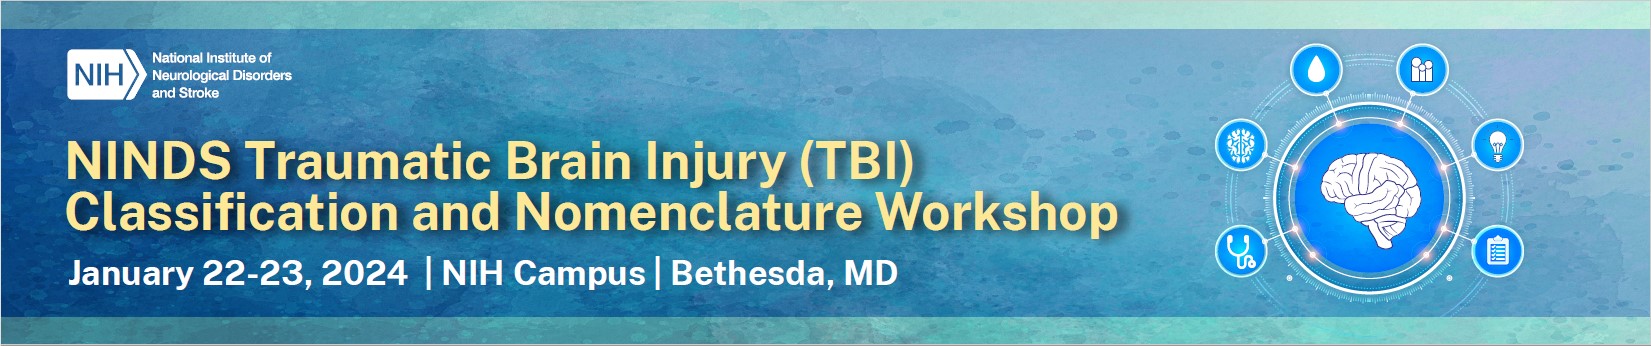 NINDS Traumatic Brain Injury (TBI) Classification and Nomenclature Workshop